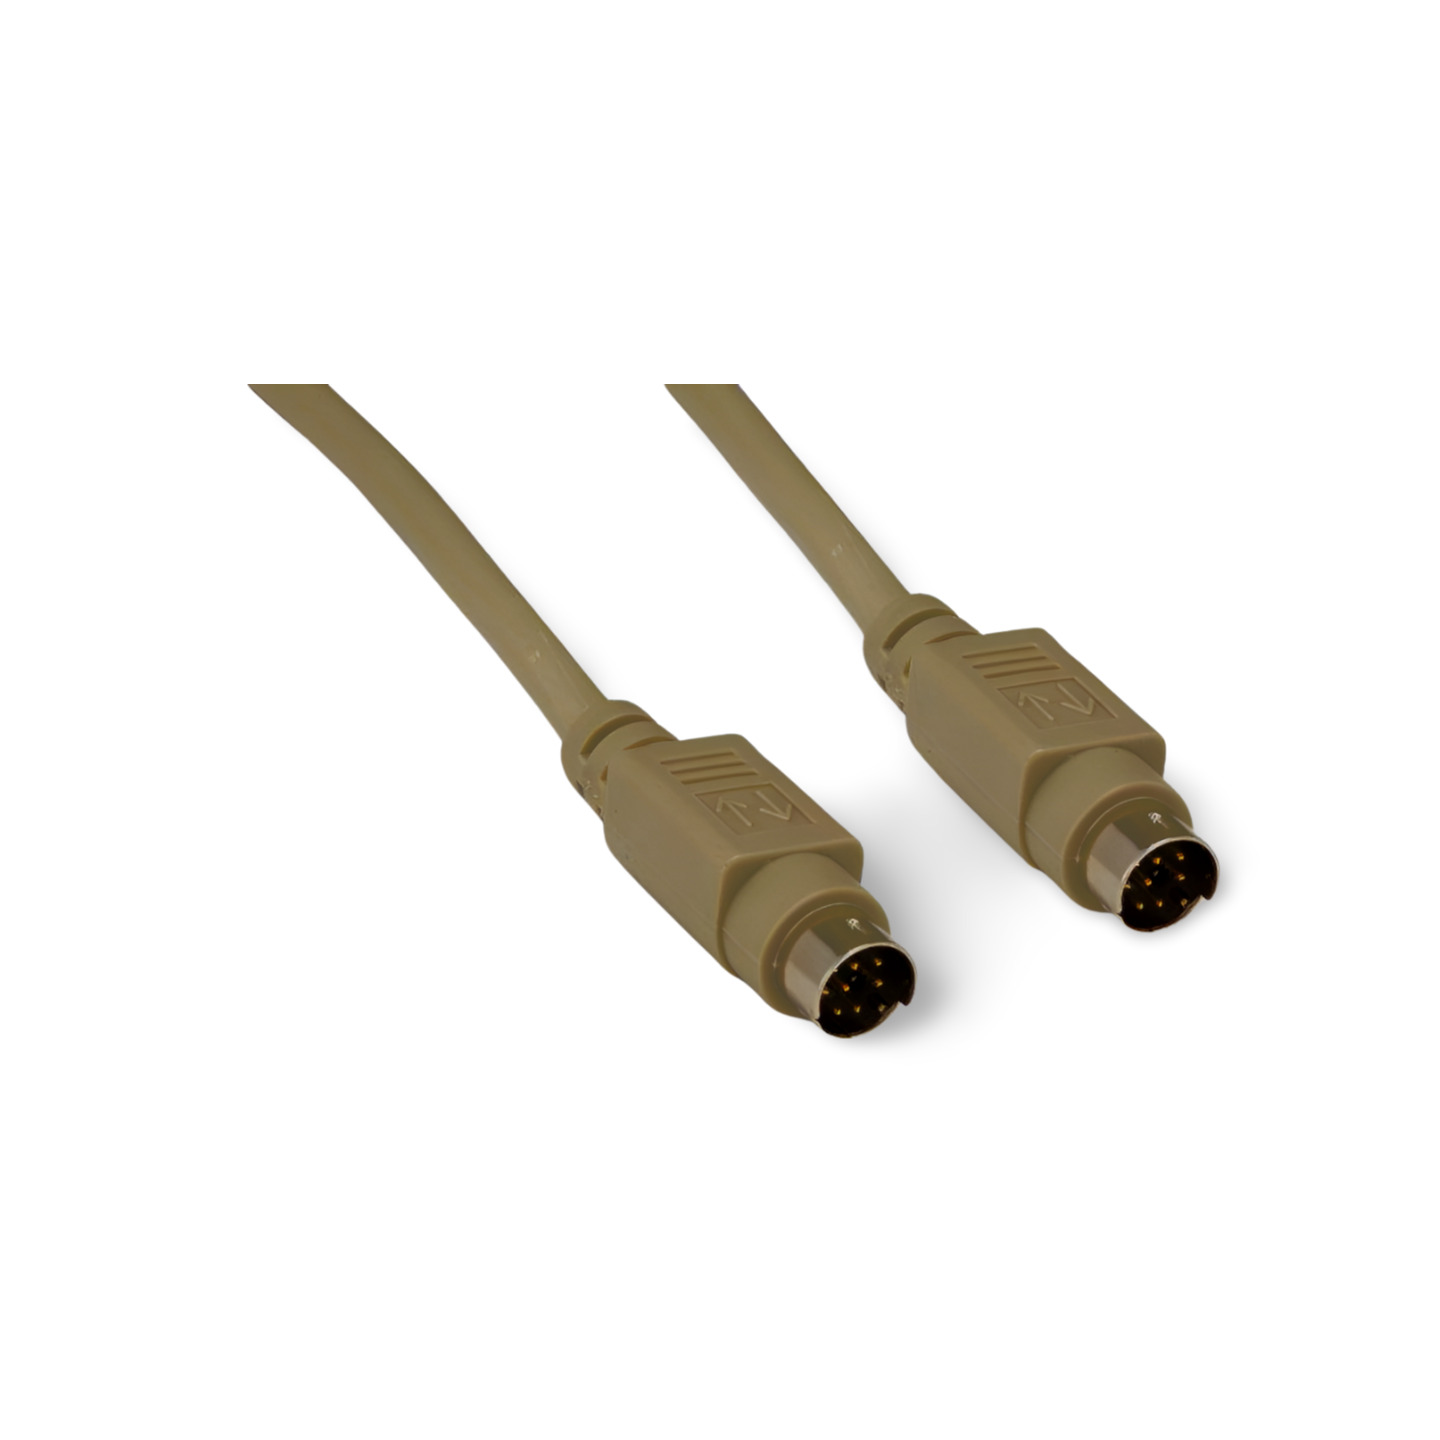 6ft Mini DIN 8 Pin Male to Mini DIN 8 Pin Male Cable - Beige